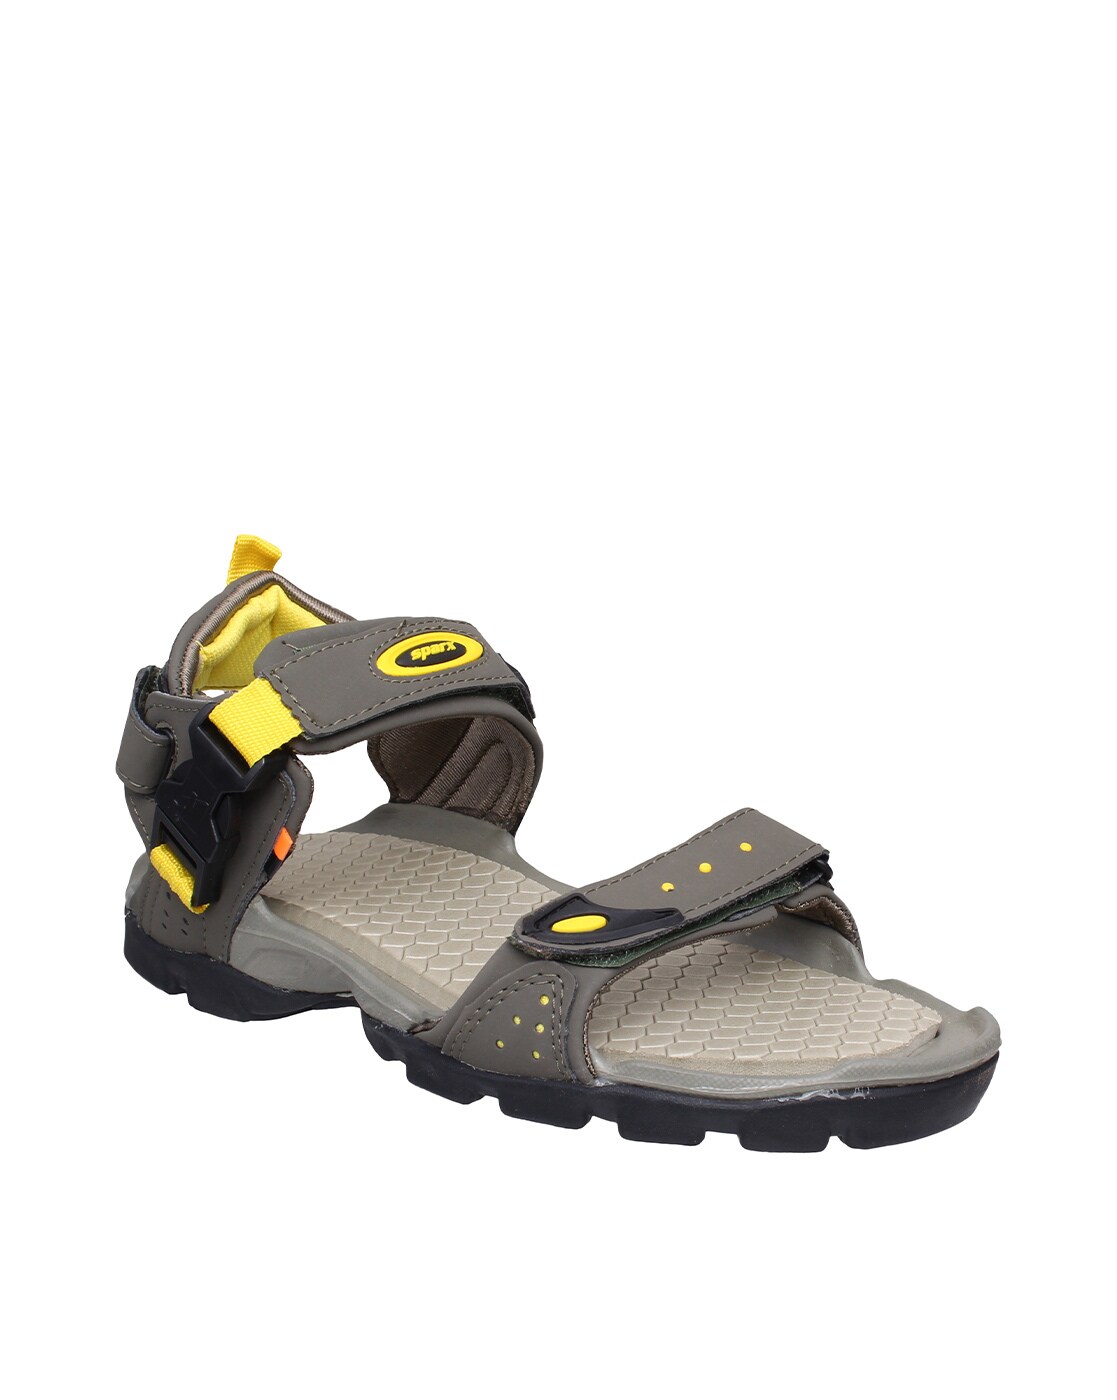 SPARX Sandals (Men) Green-SS-596